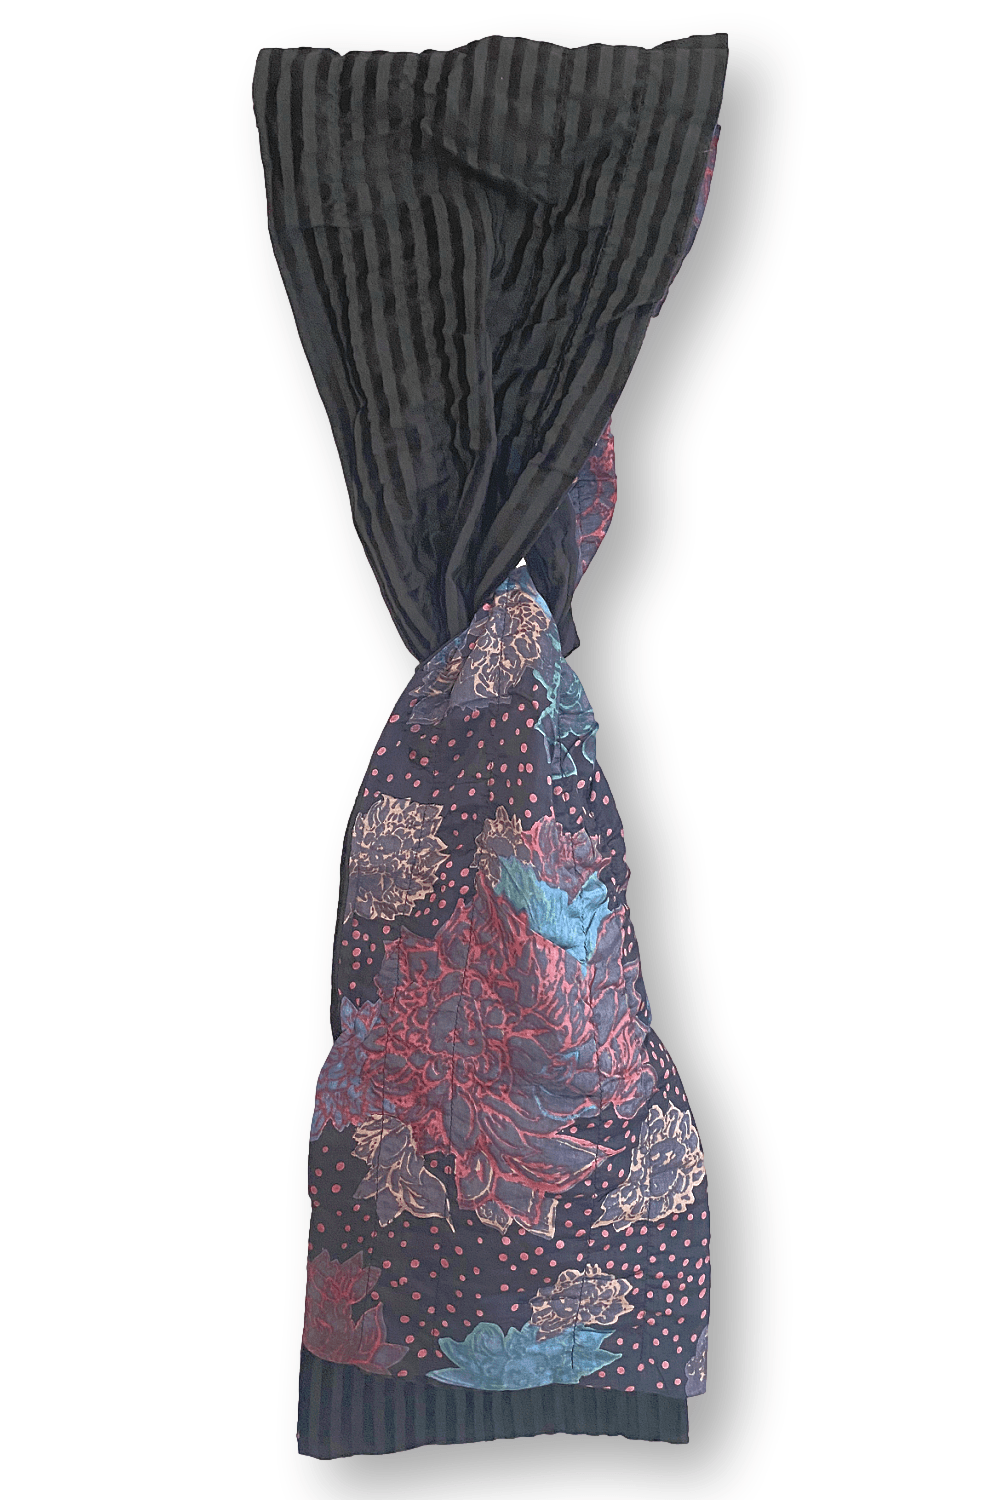 Velvet reversible scarf with black stripes and a floral design in black tones.